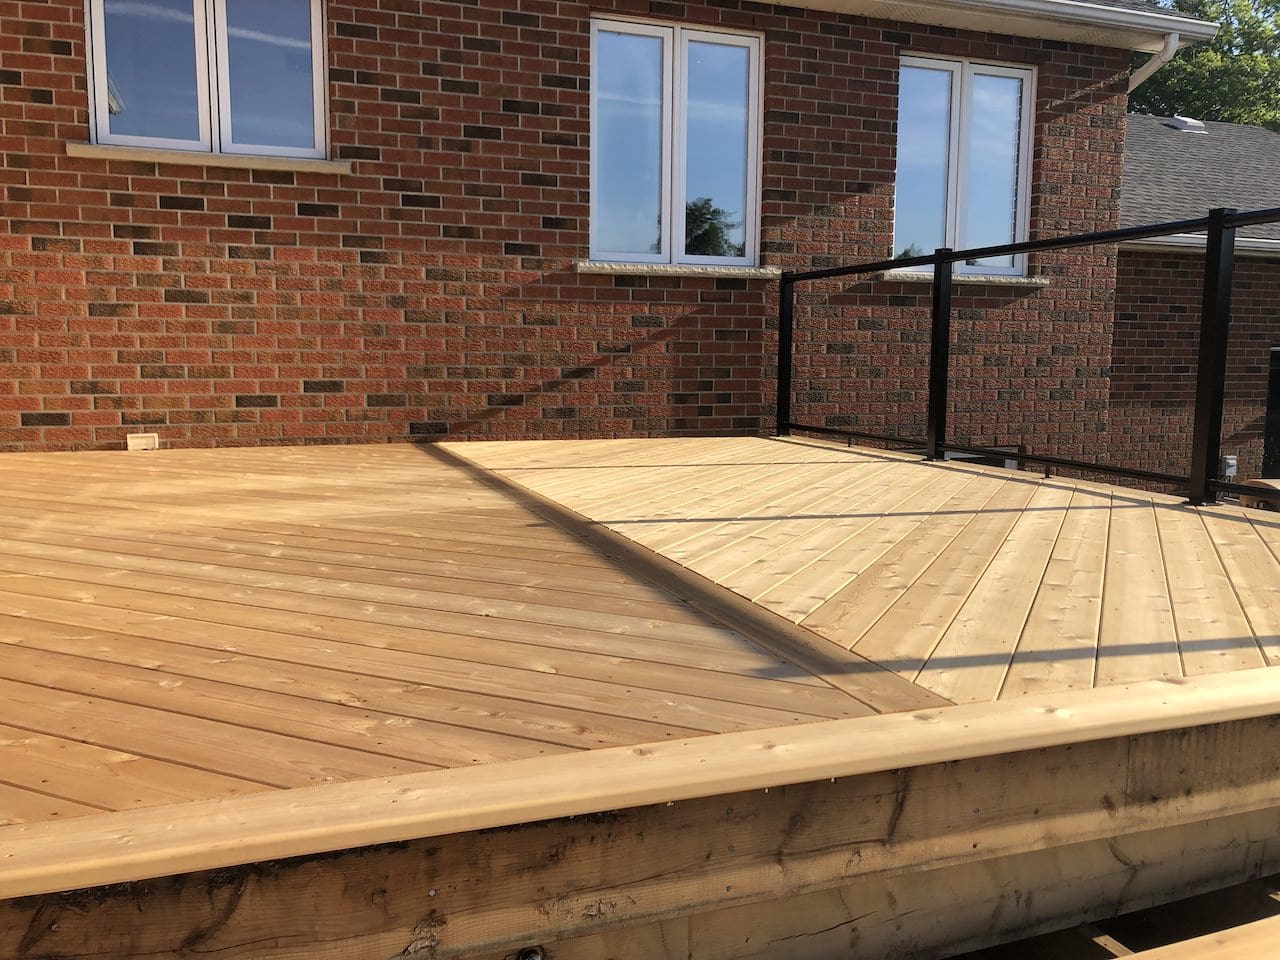 New Cedar Deck Millgrove